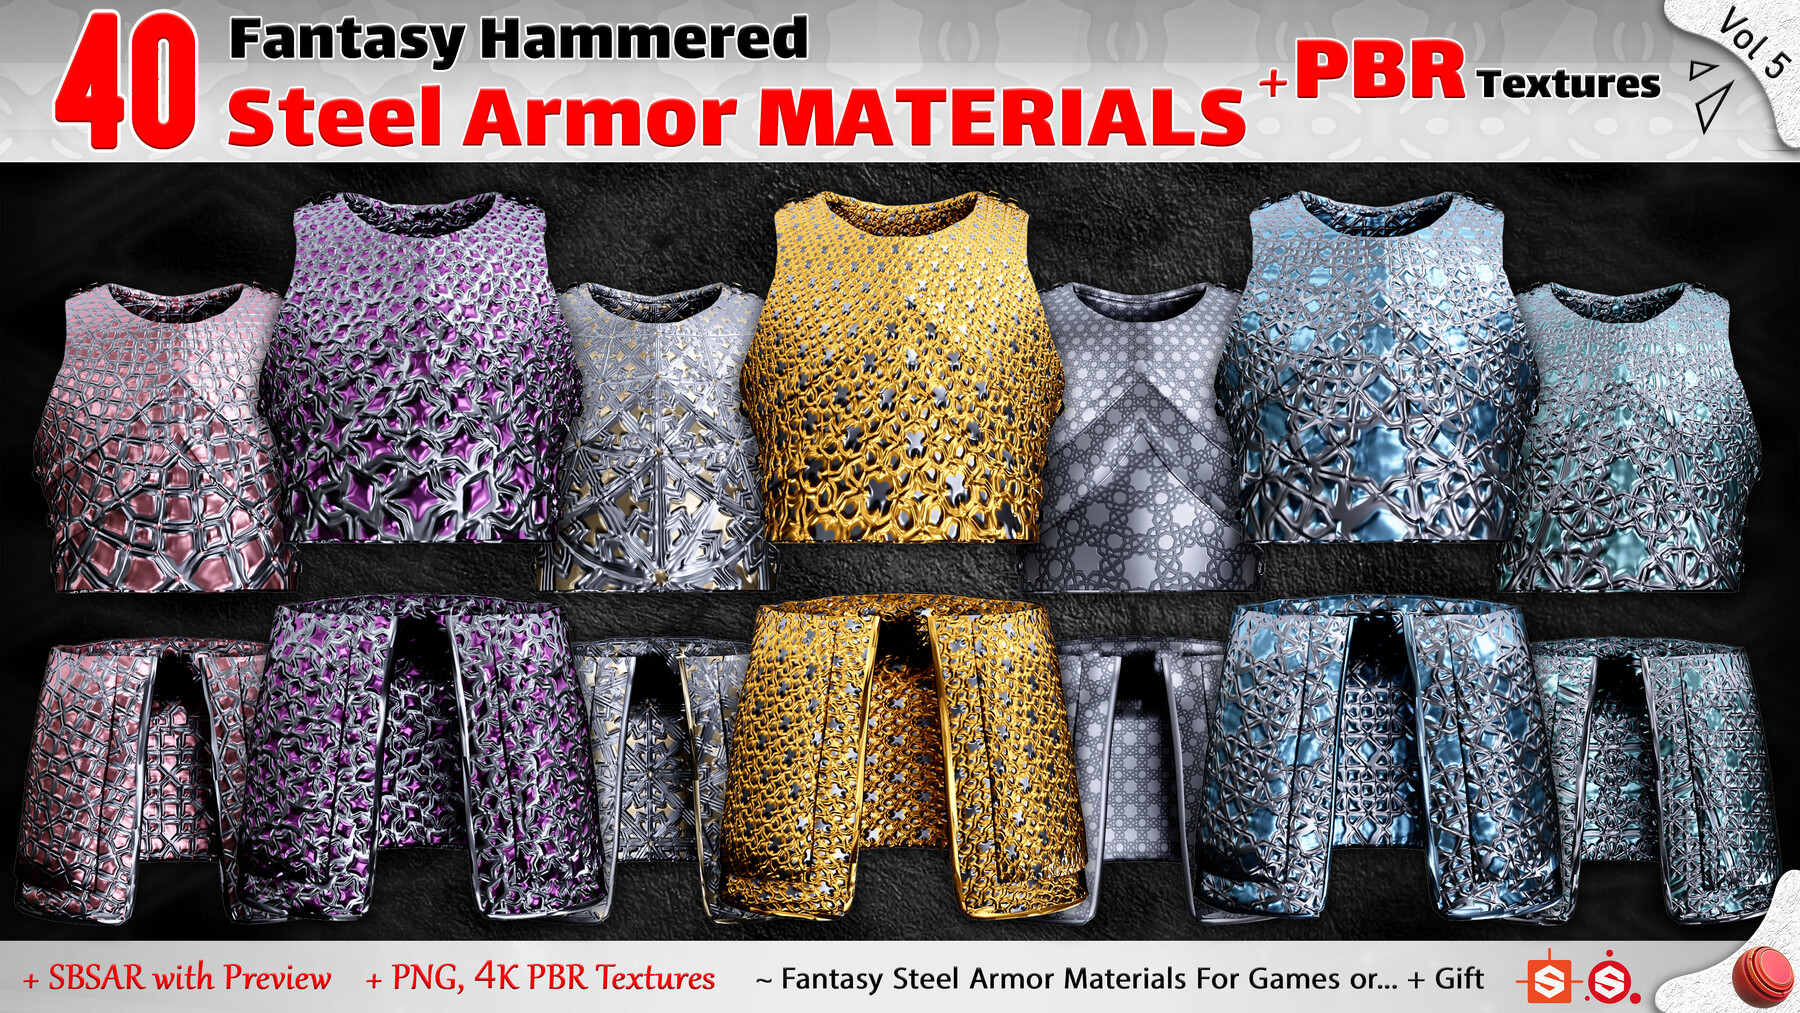 ArtStation - 20 PBR Leather Armor Texture (Seamless) VOL 4